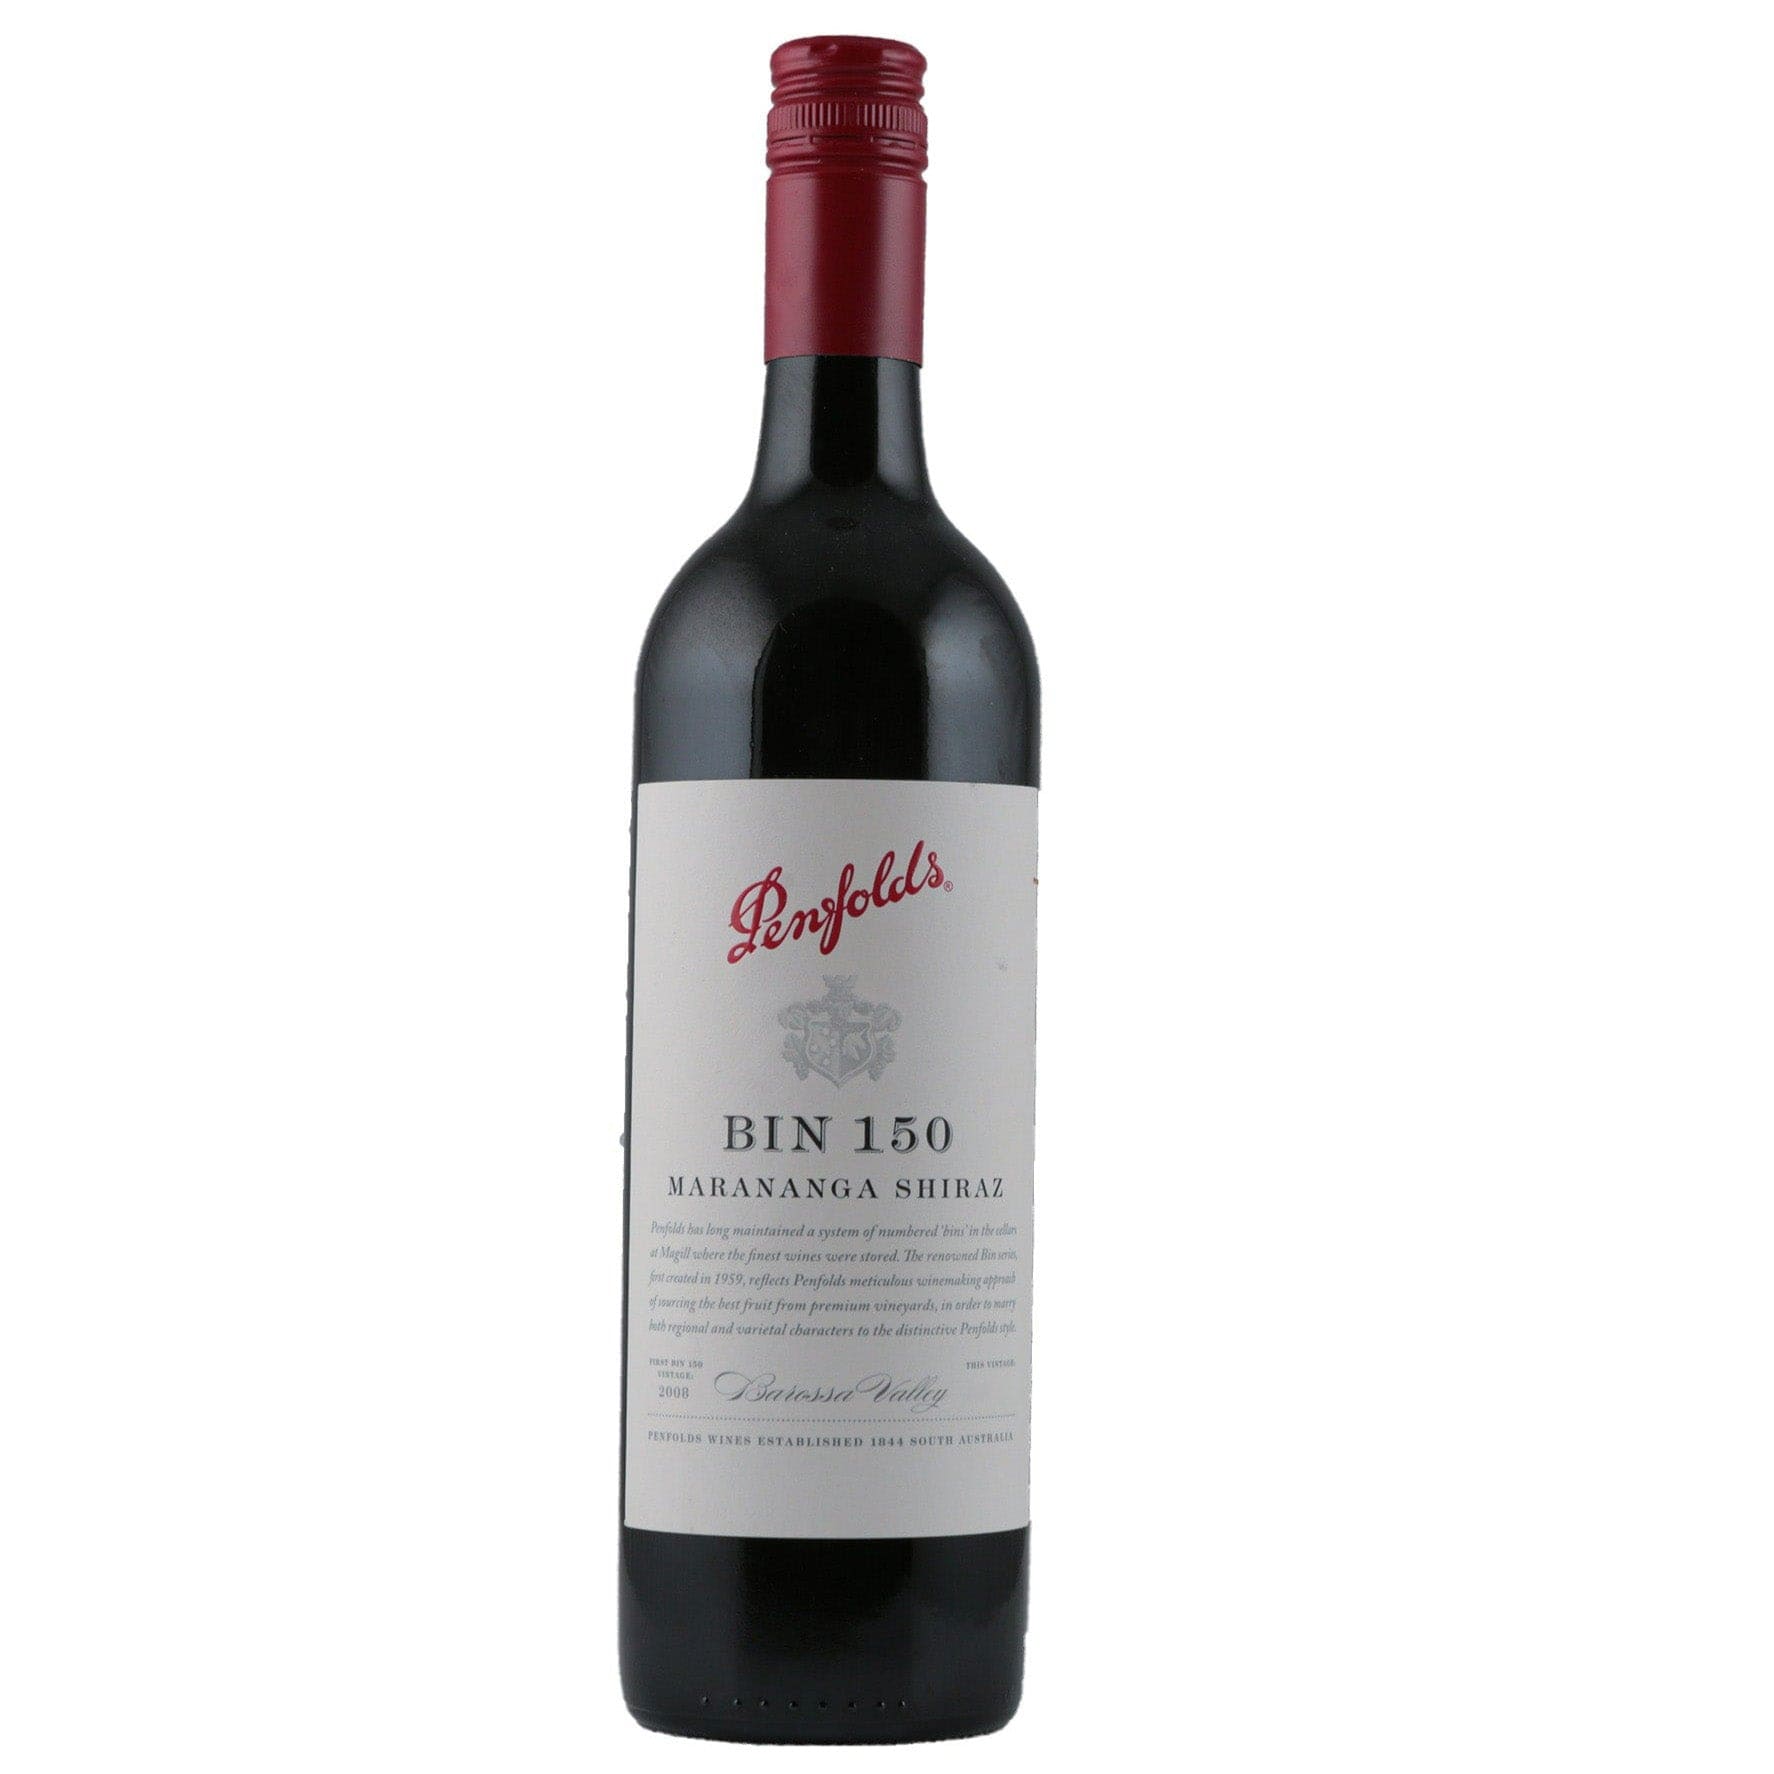 Single bottle of Red wine Penfolds, Bin 150 Marananga Shiraz Barossa Valley, 2010 100% Shiraz